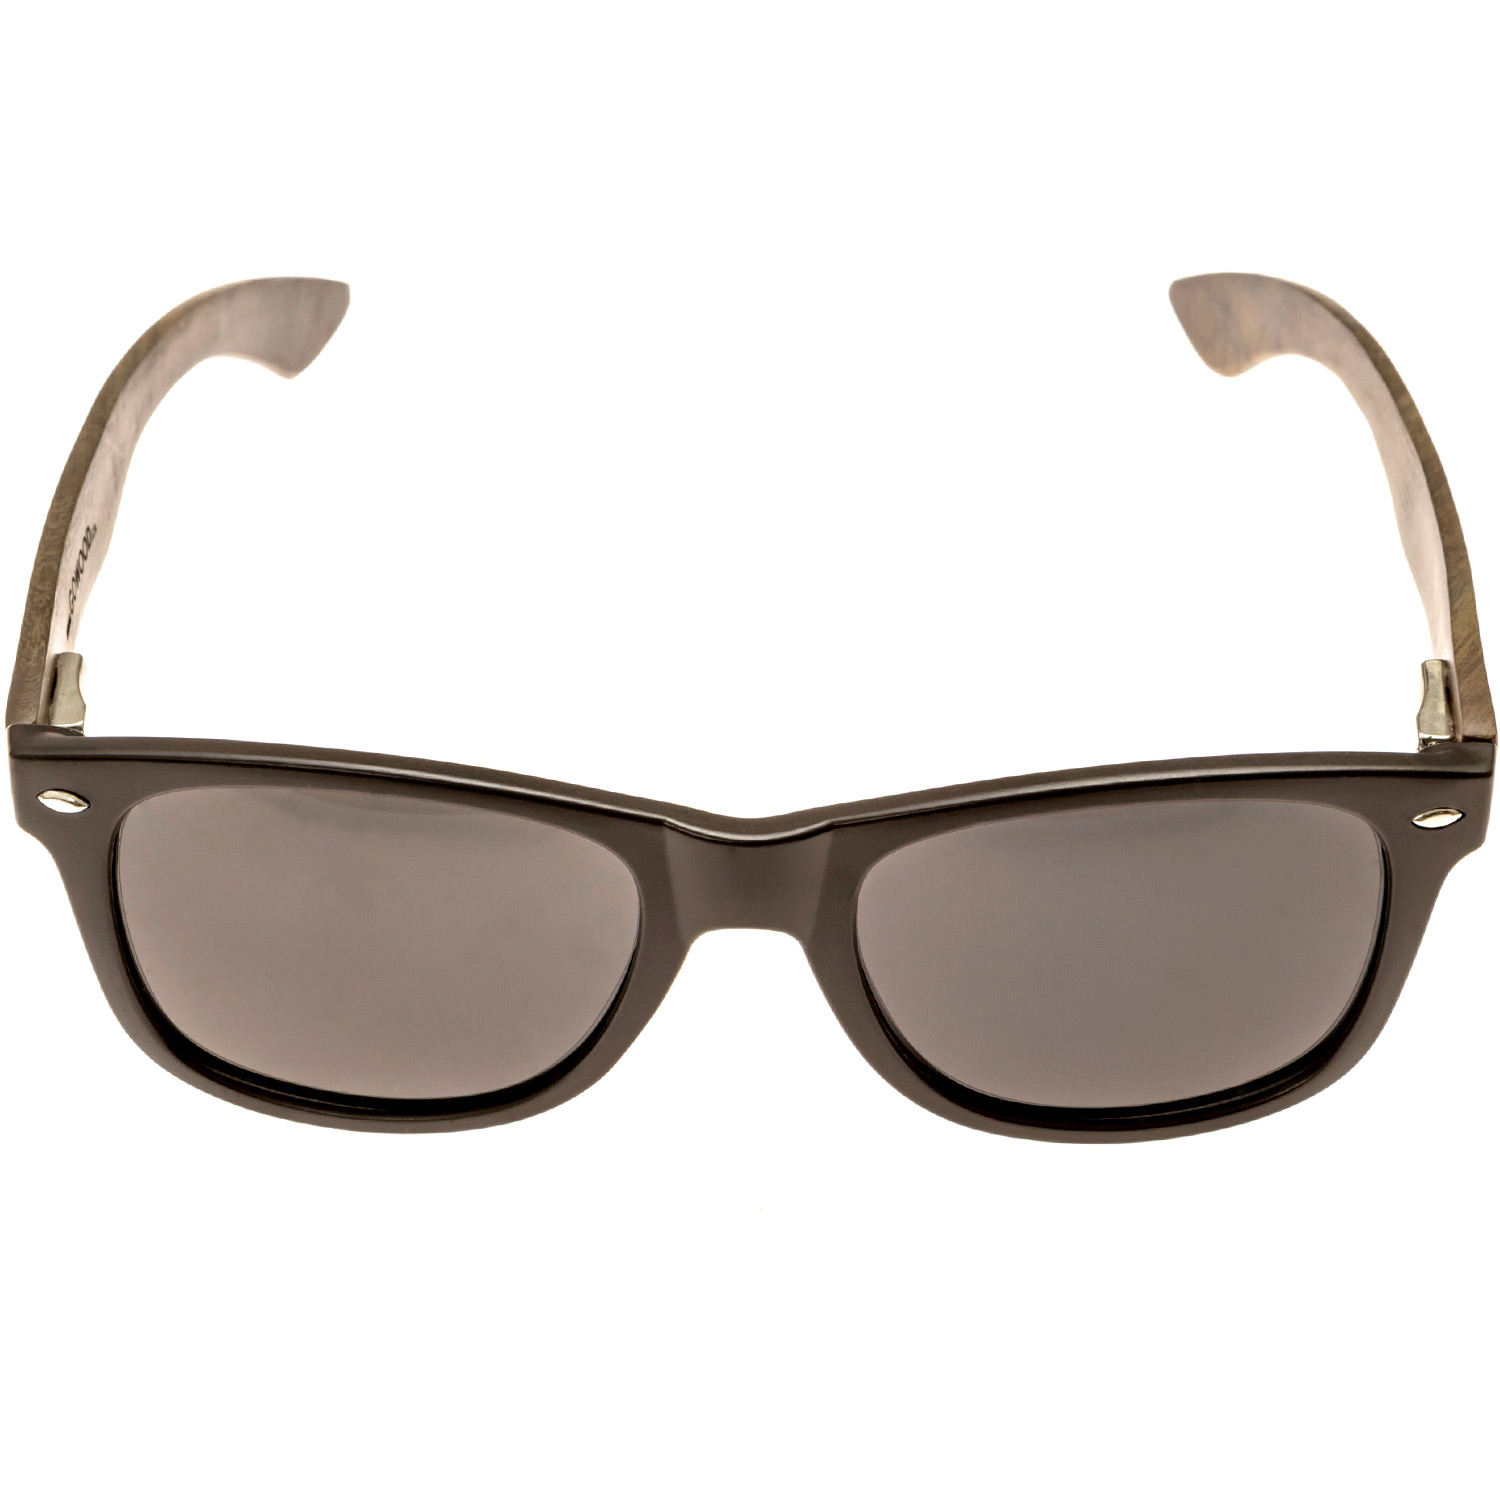 Ebony wood wayfarer sunglasses black lenses acetate front frame